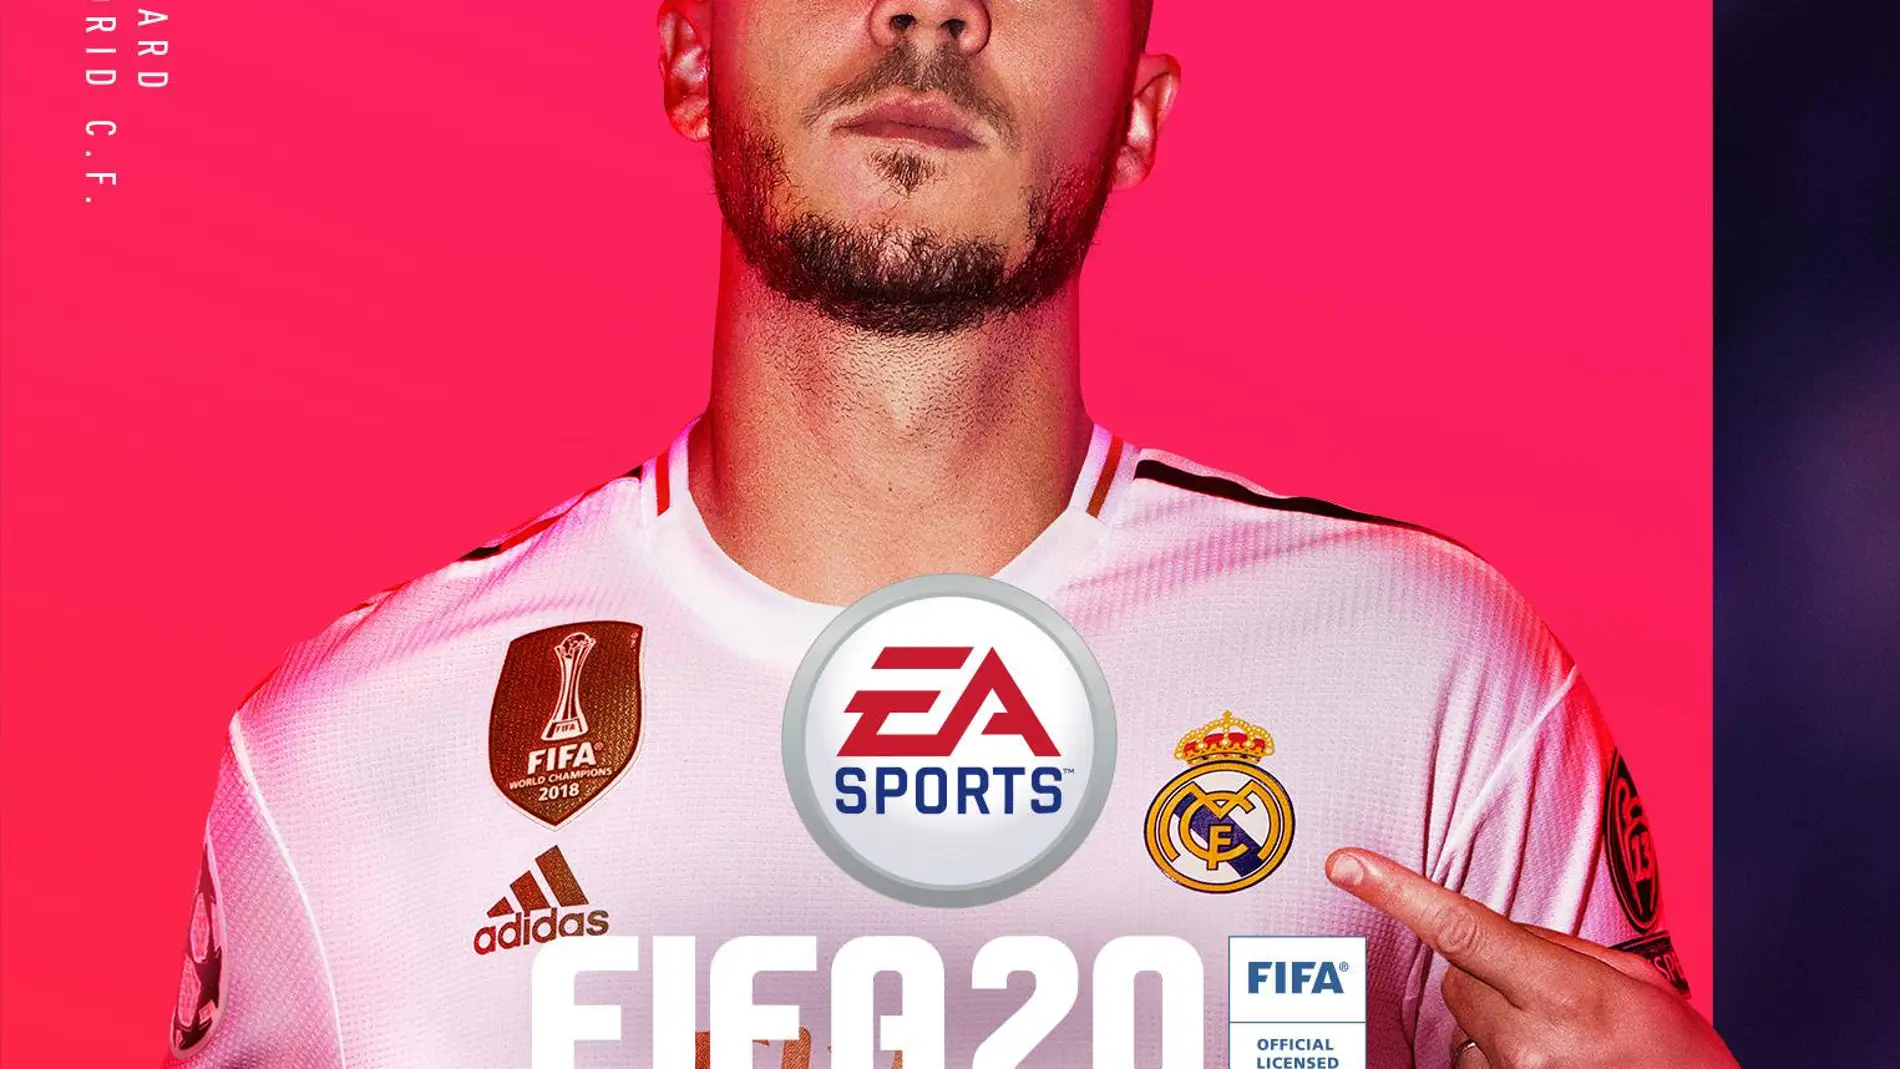 Portada FIFA 20